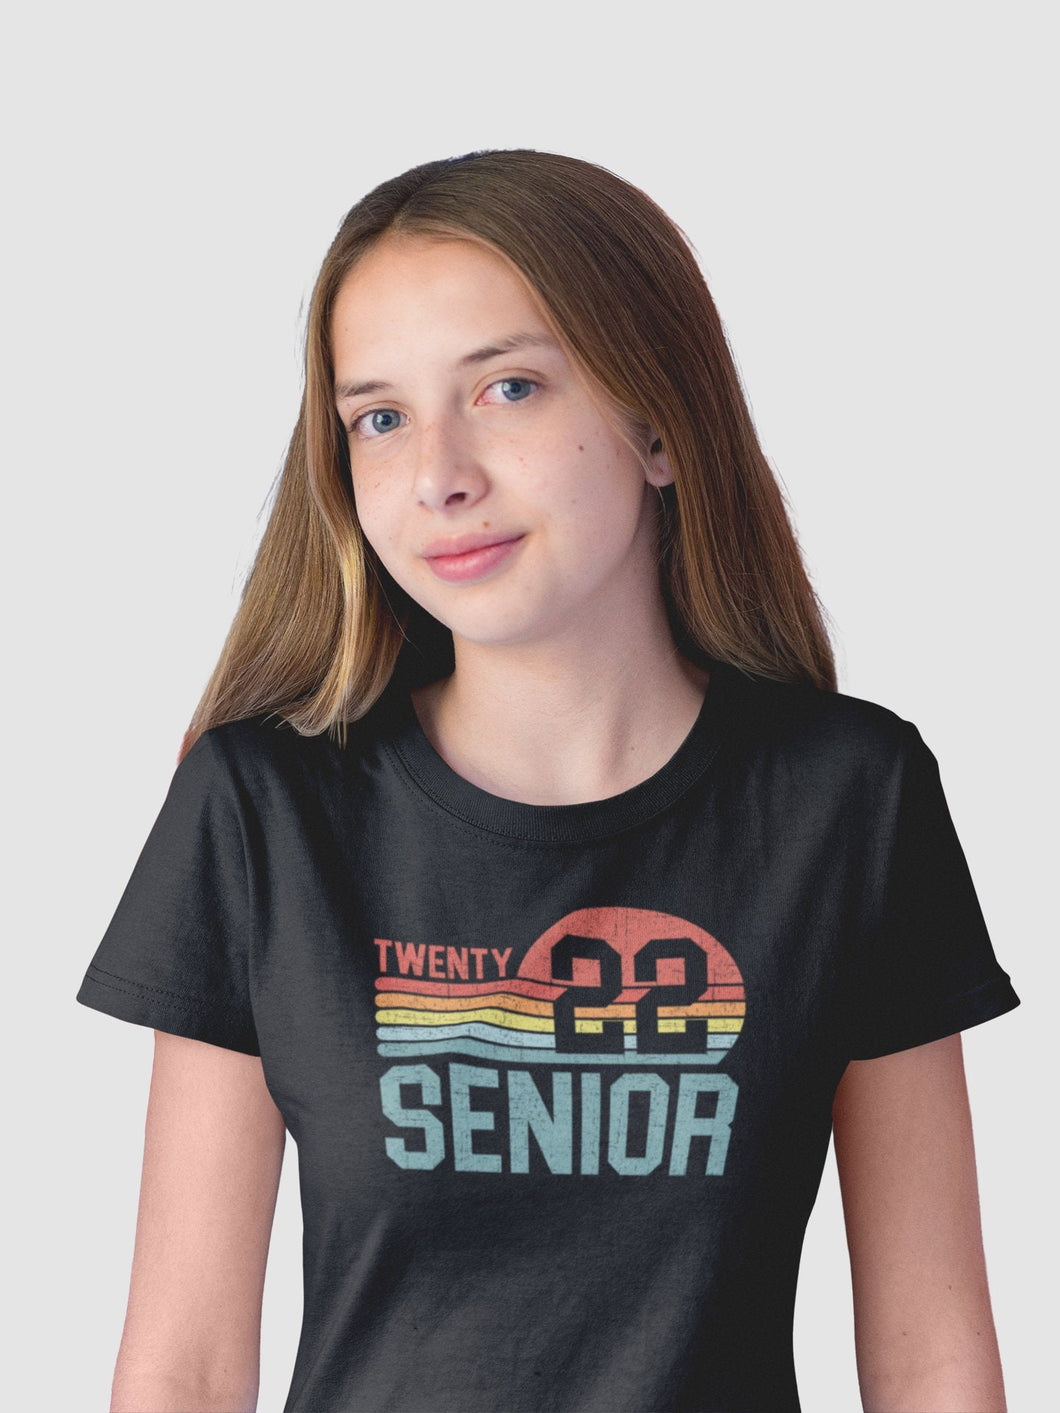 Twenty 22 Senior Shirt, Official Senior 2022 Shirt, Senior Graduation Shirt, 2022 Graduation Gift, College Senior 2022 Shirt